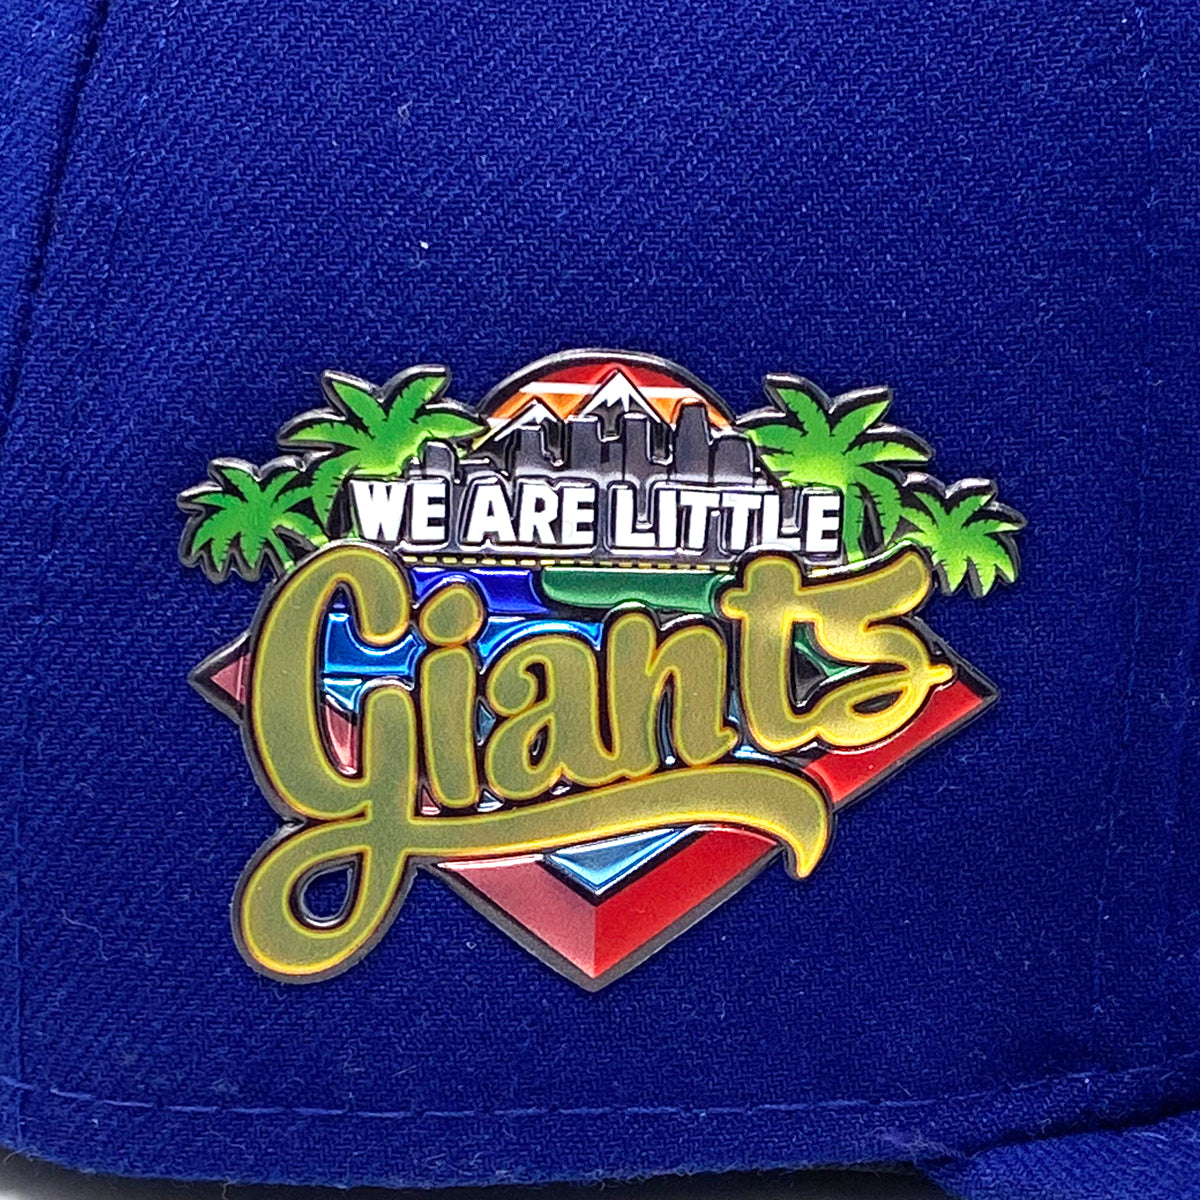 LA Dodgers LG Side Patch SnapBack Hat